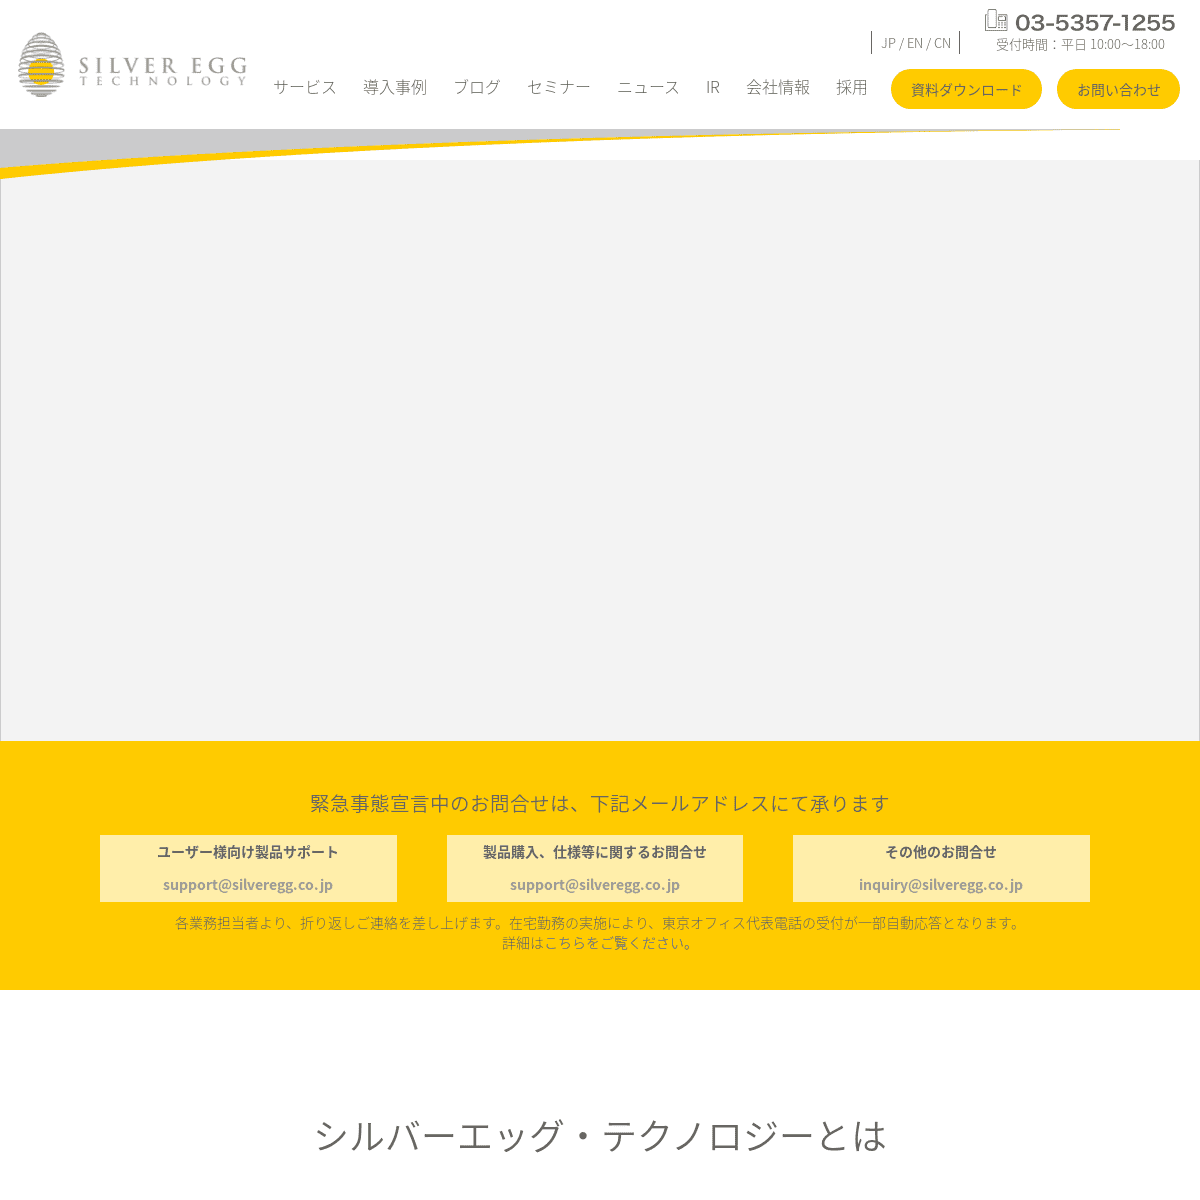 A complete backup of https://silveregg.co.jp